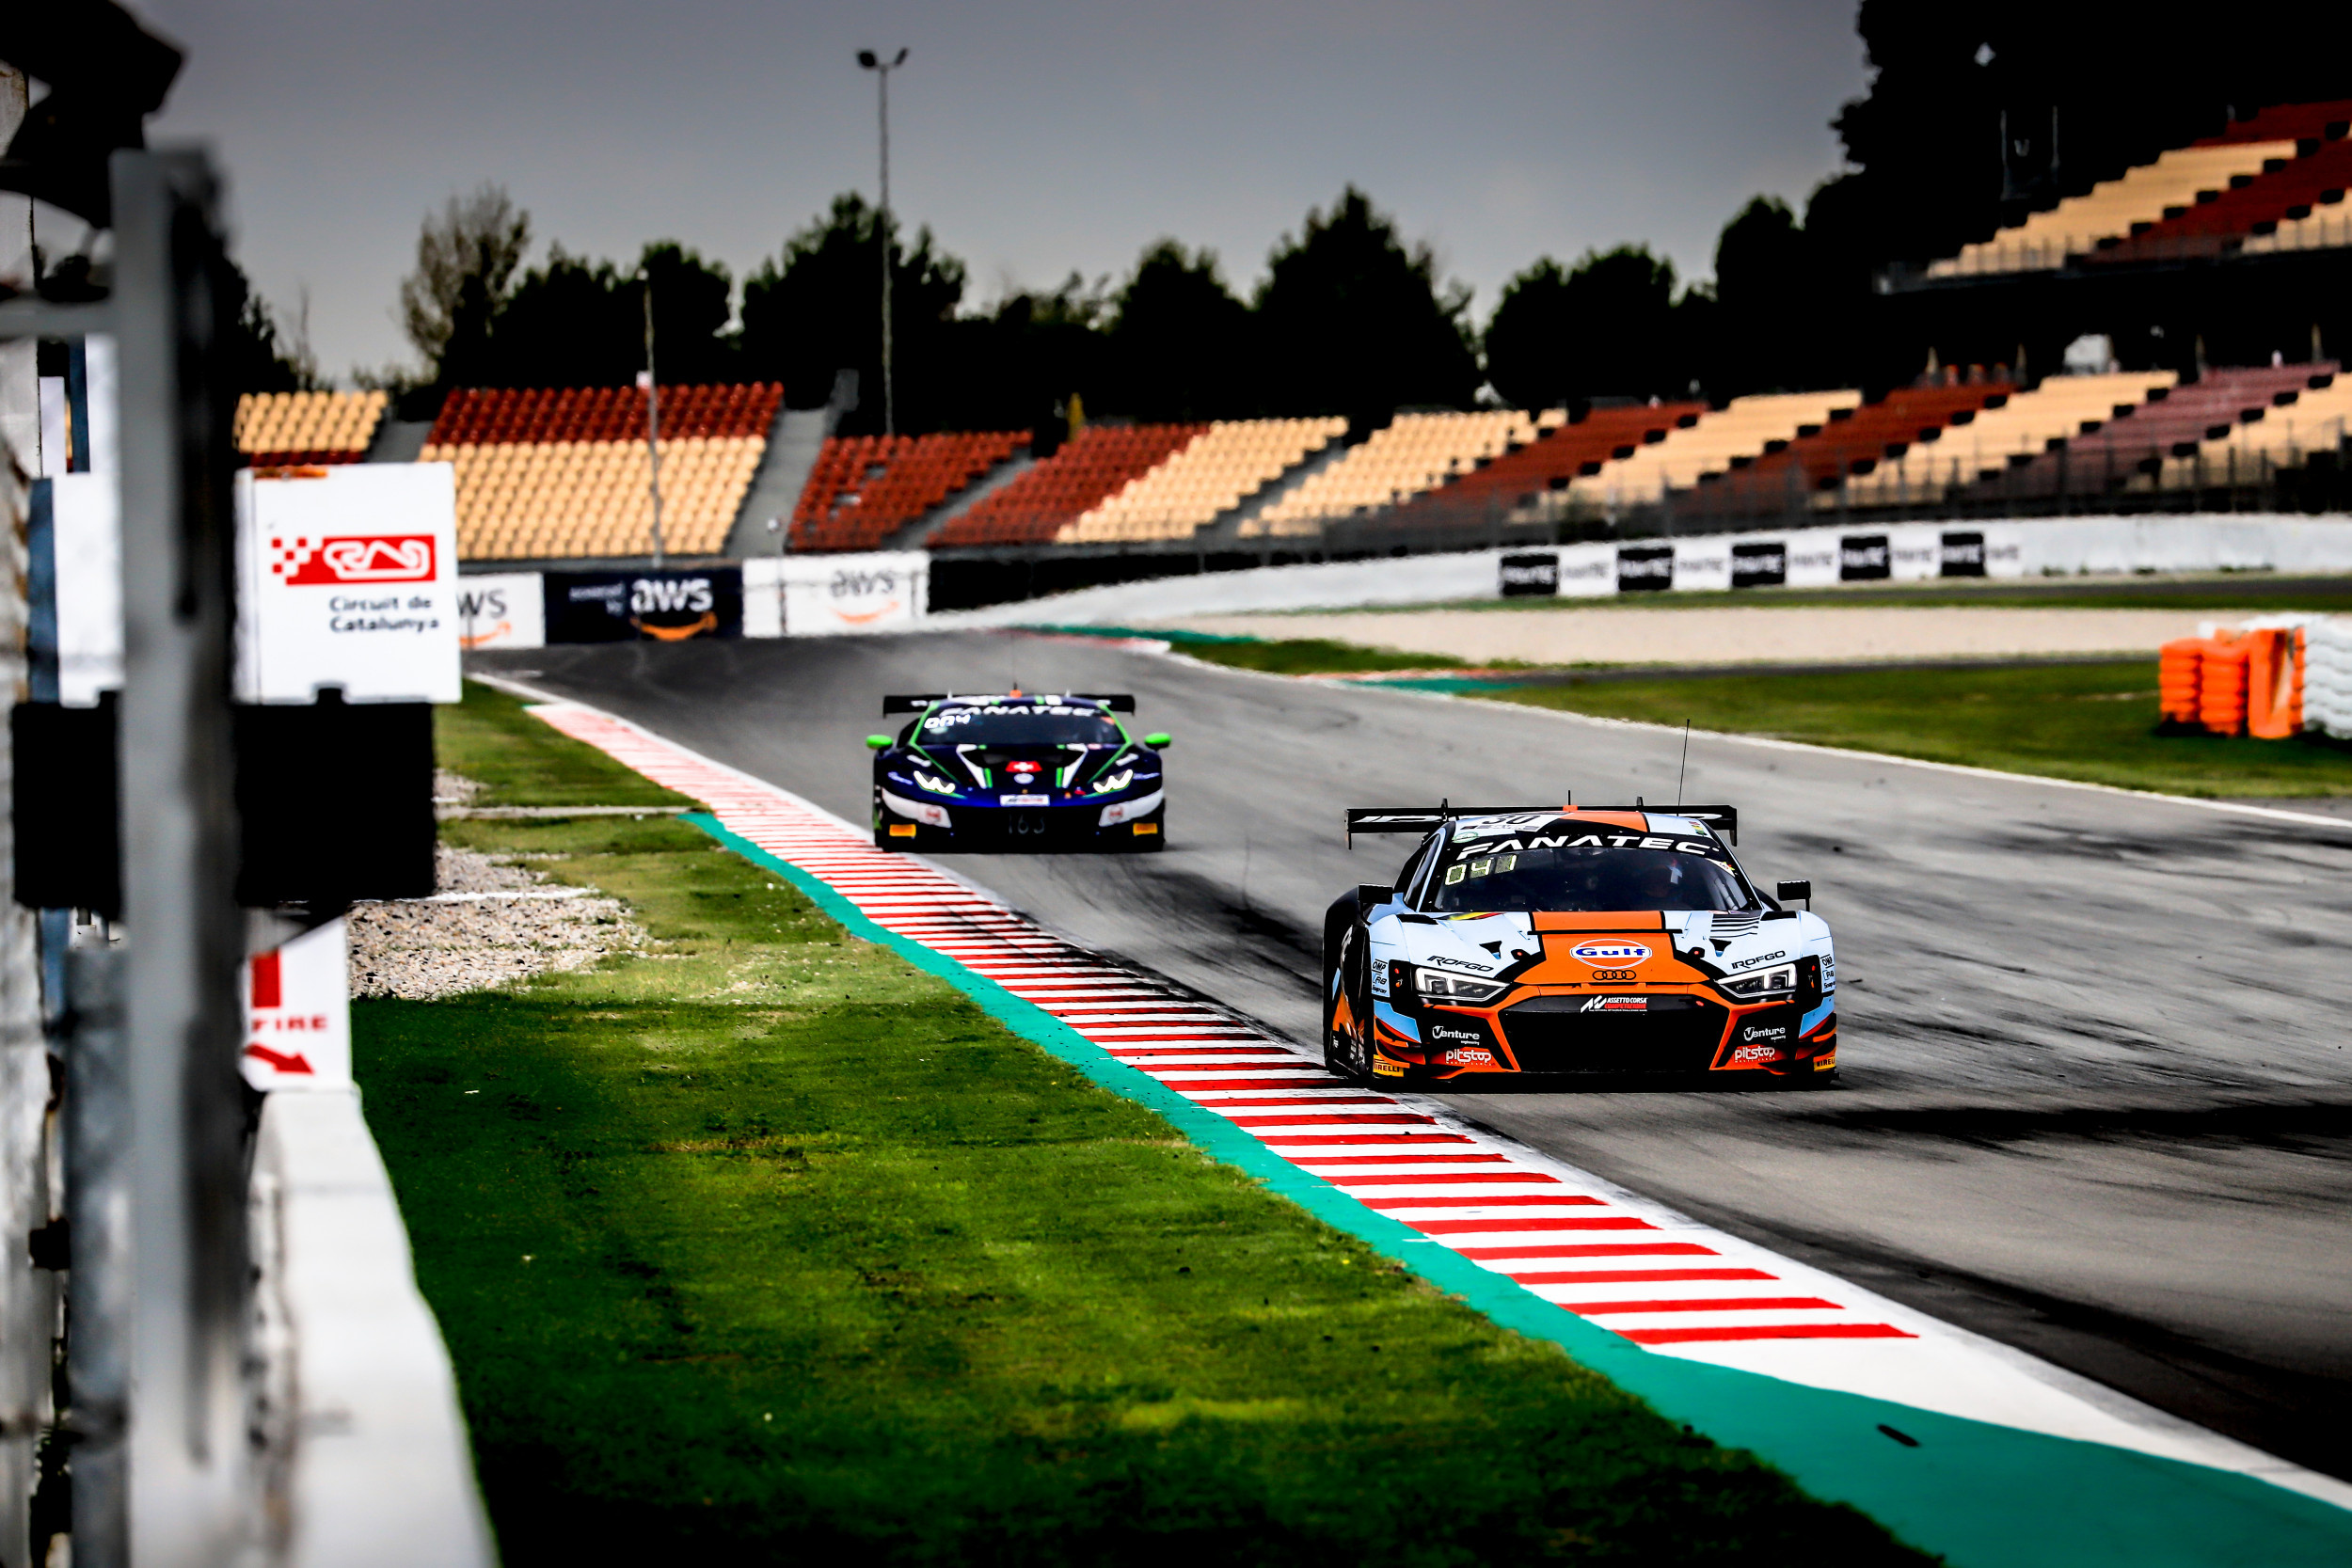 Endurance Racing: GT World Challenge Europe, Barcelona, Audi, Speed Driving, Sports Cars. 2500x1670 HD Wallpaper.